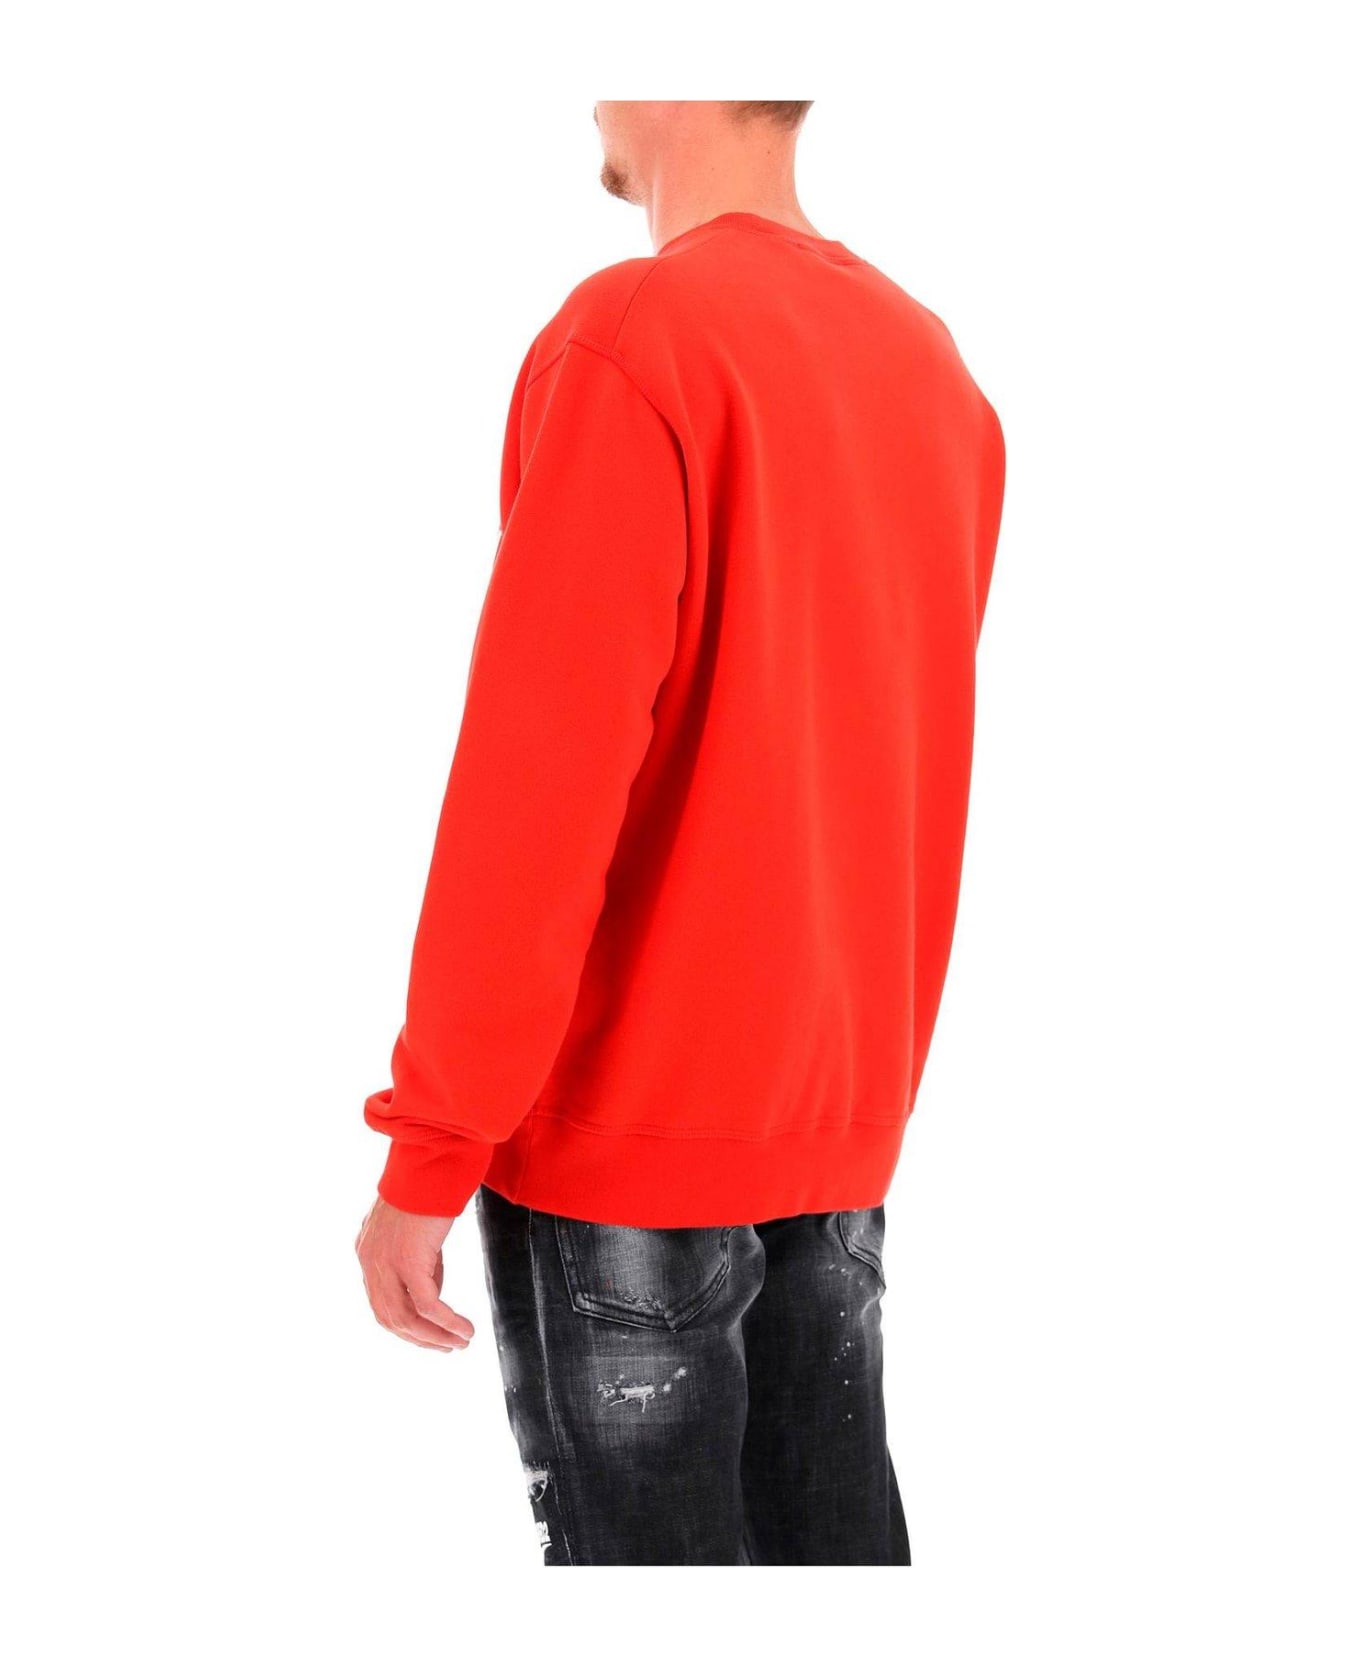 Dsquared2 Sweatshirt - ORANGE (Red)